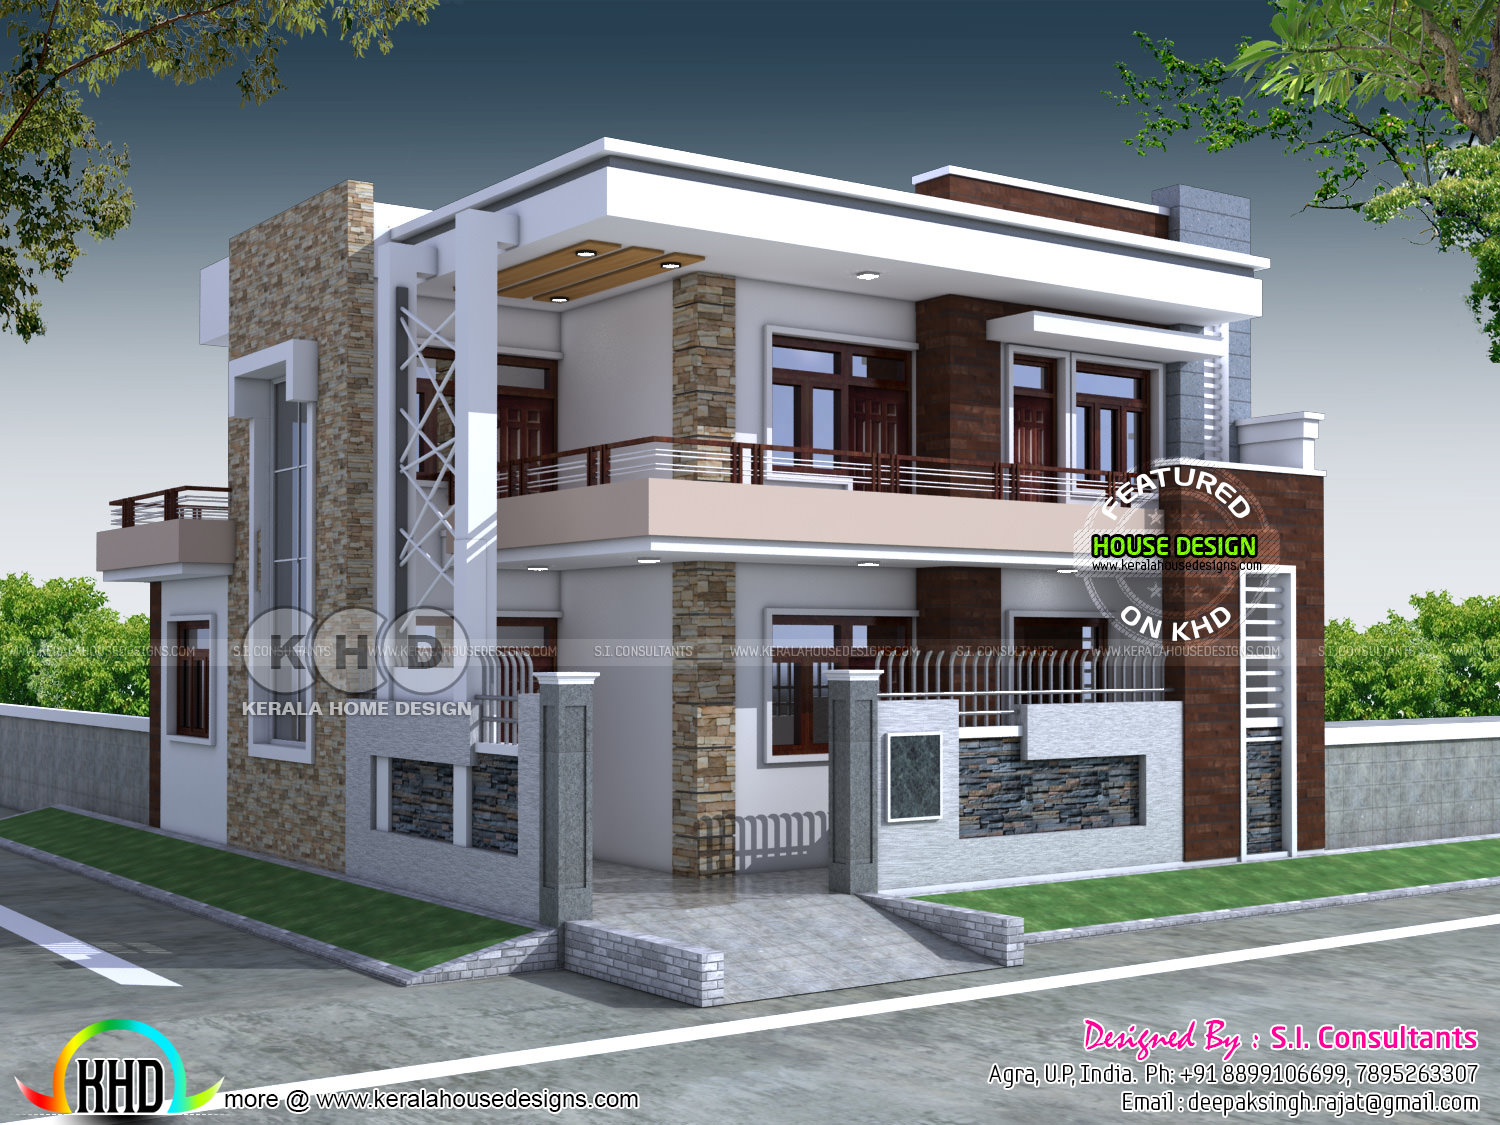 37x42 5 bedroom  contemporary house  Kerala  home  design  